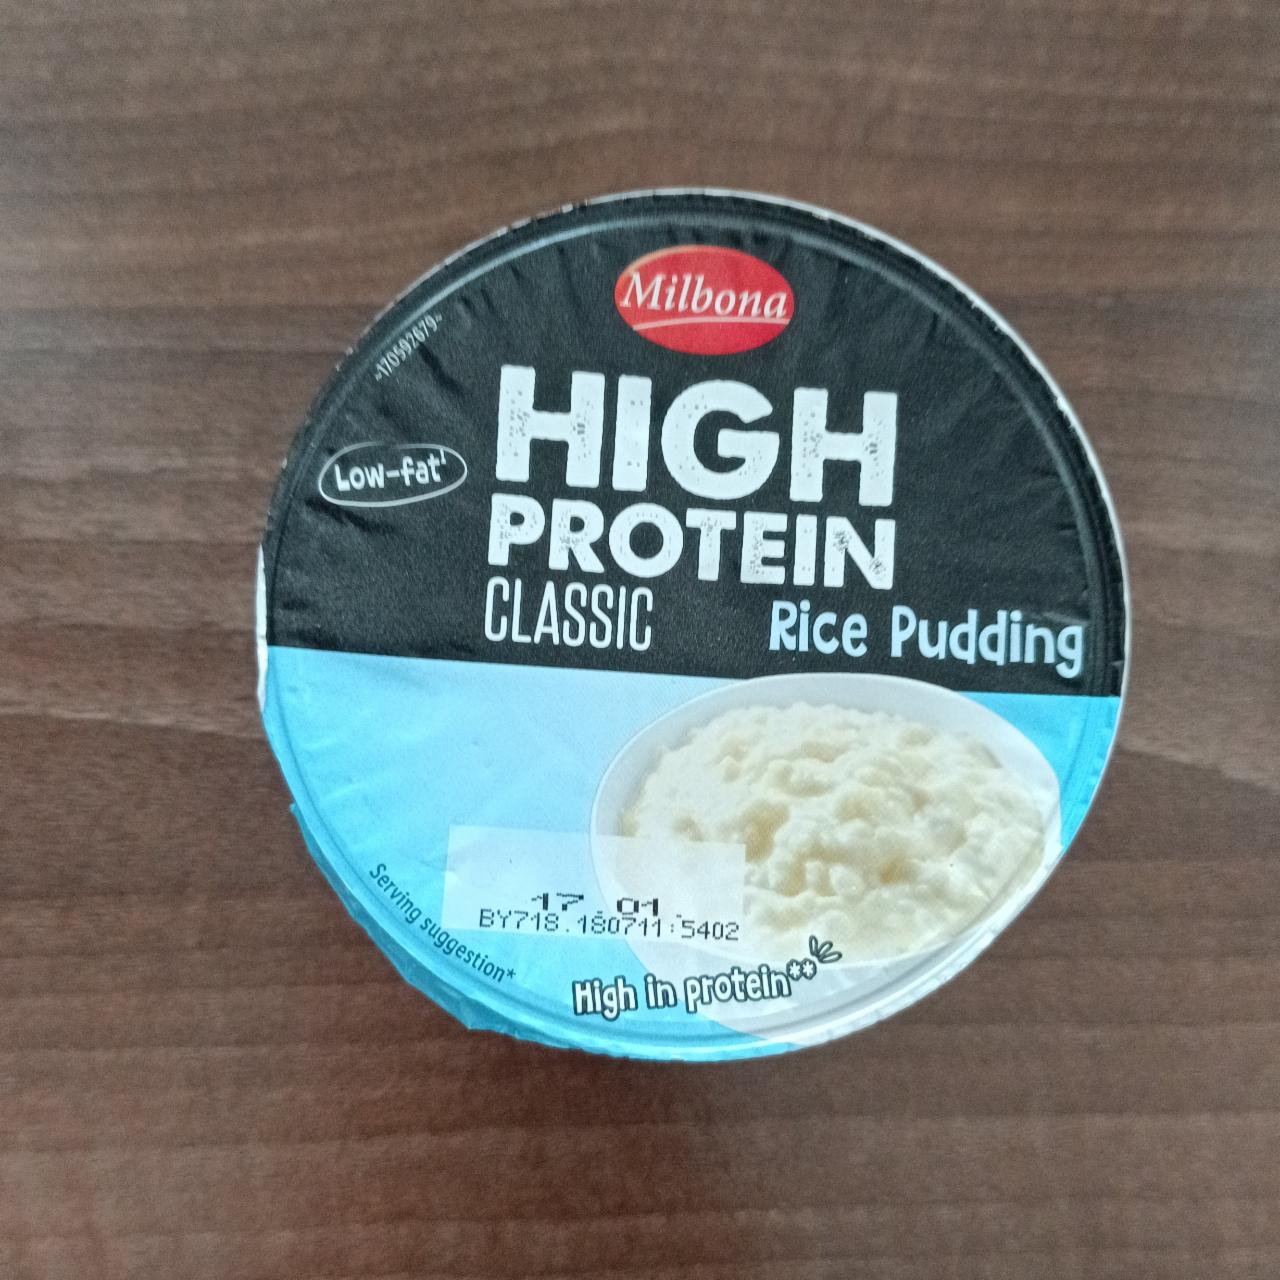 Képek - High protein classic rice pudding Milbona